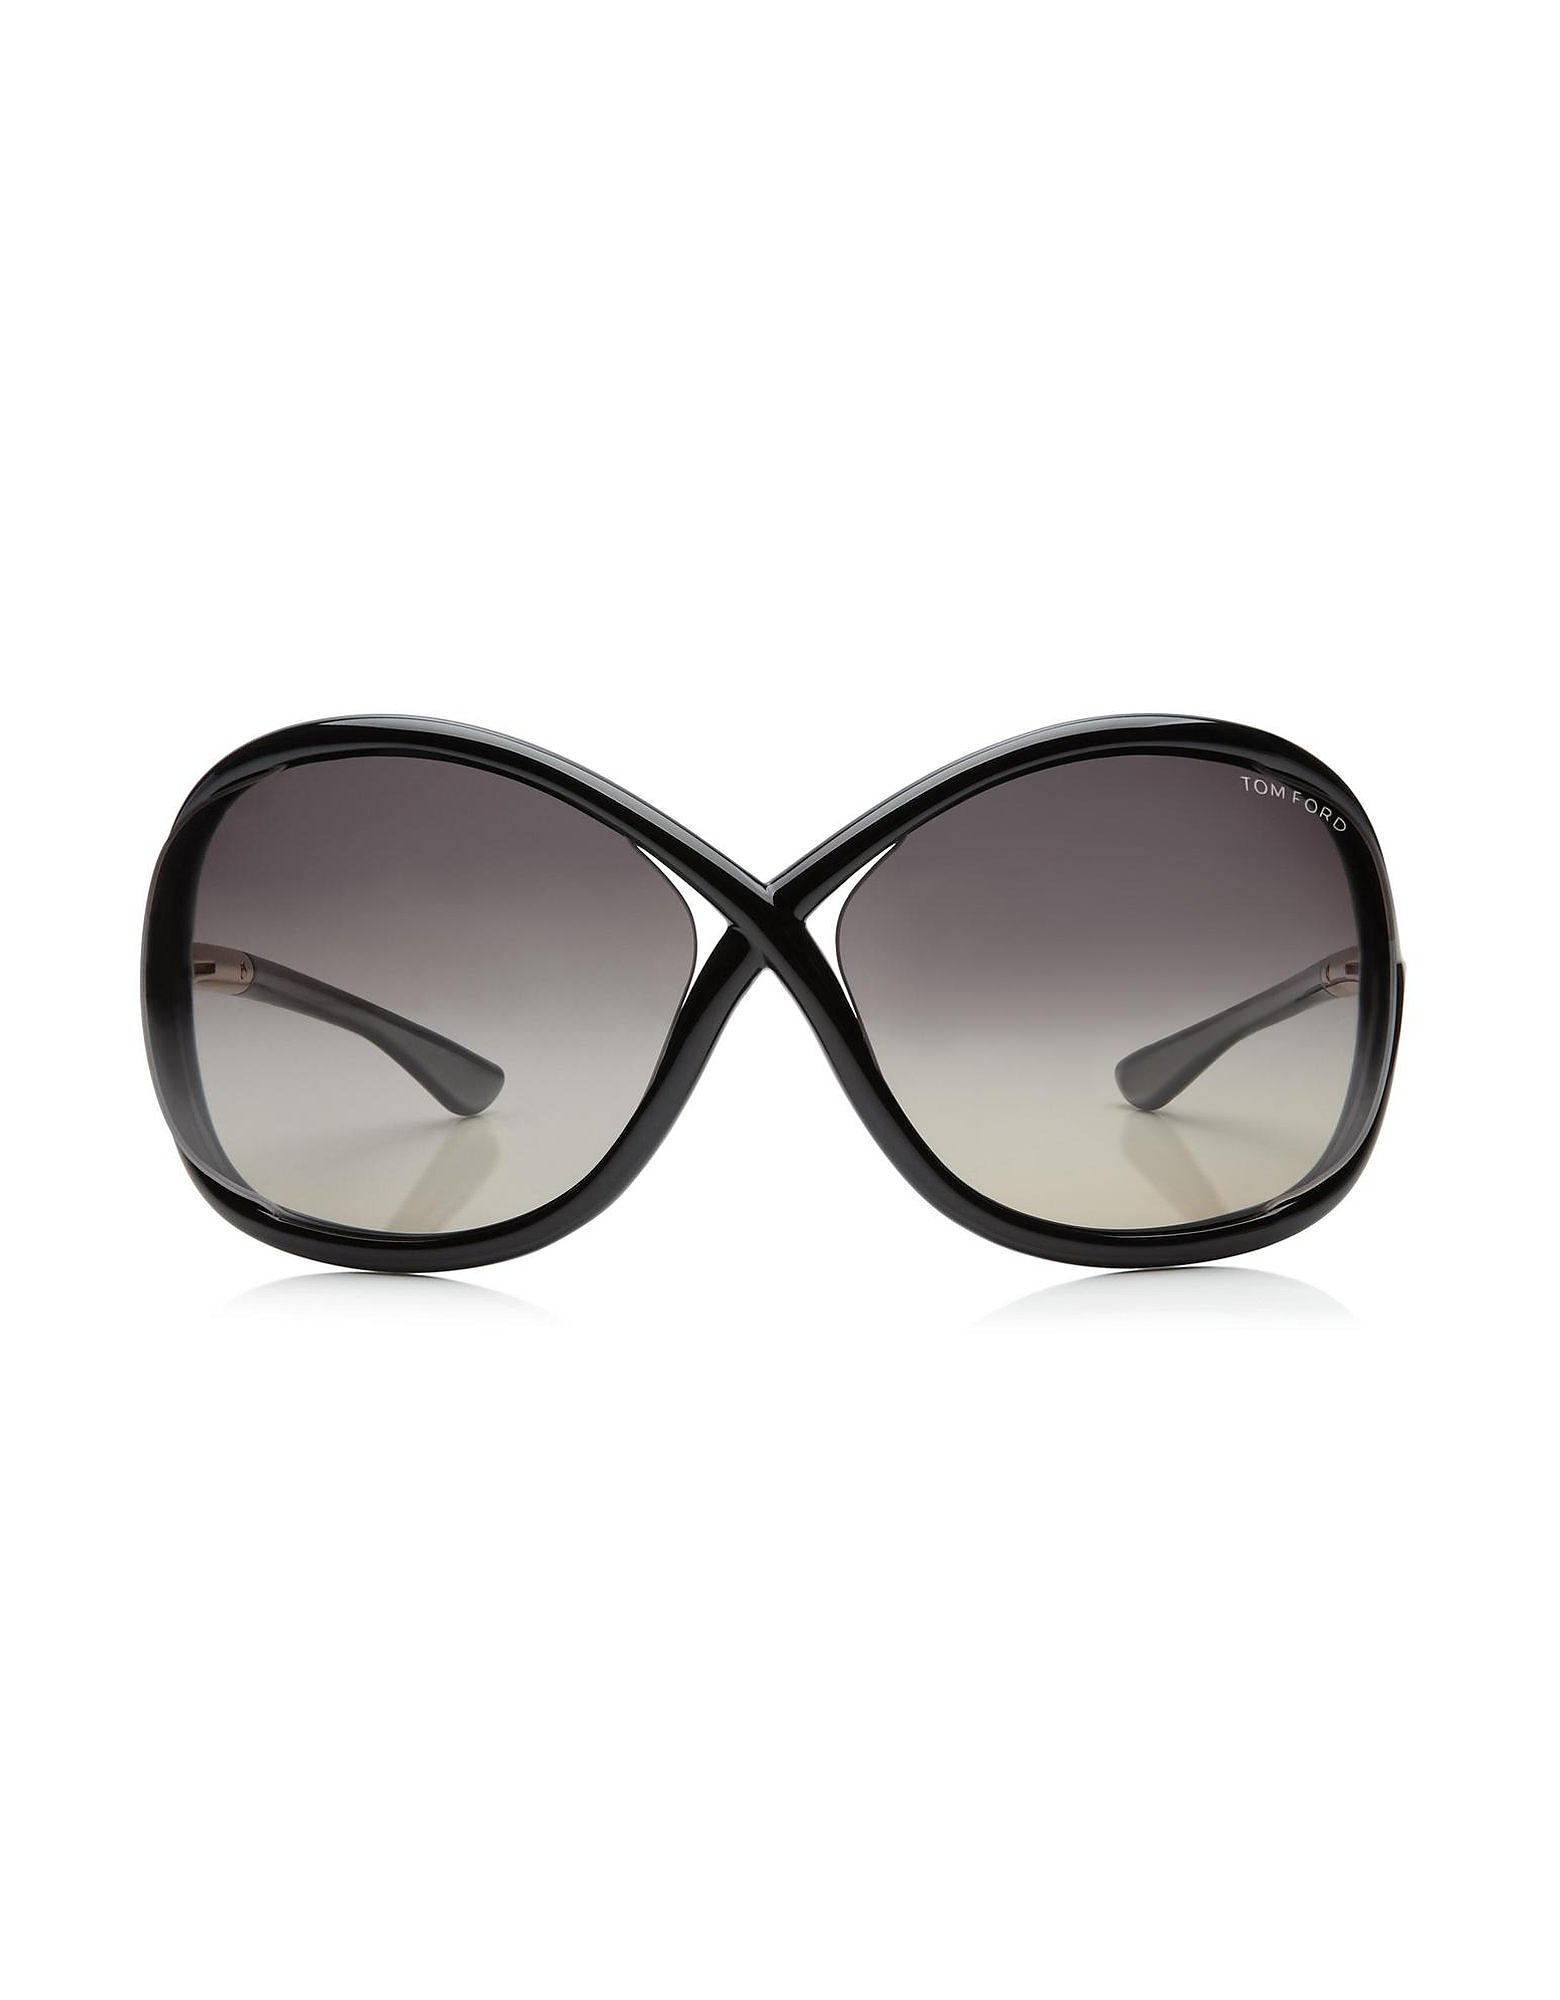 Tom Ford Sunglasses WHITNEY FT009 B5 Oversized Soft Round Sunglasses